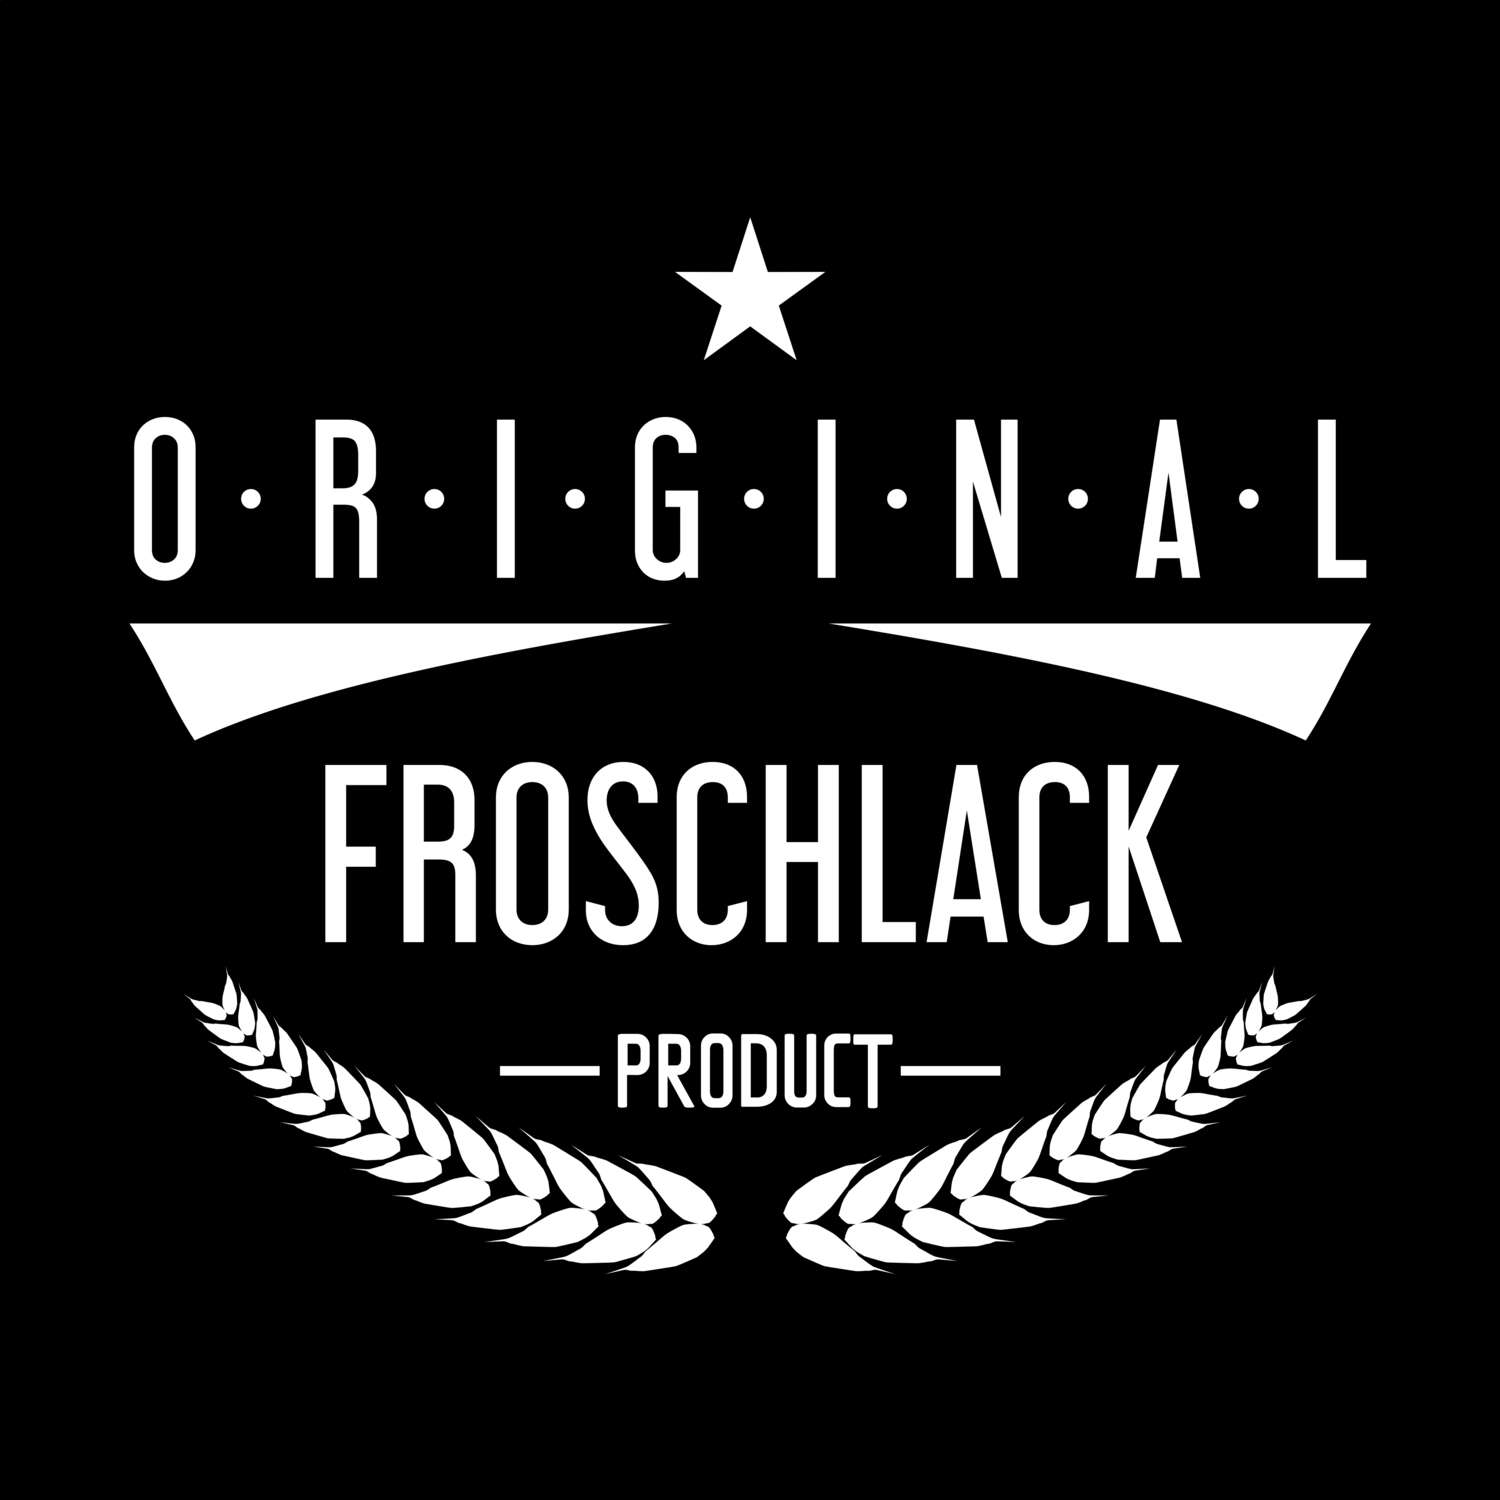 Froschlack T-Shirt »Original Product«